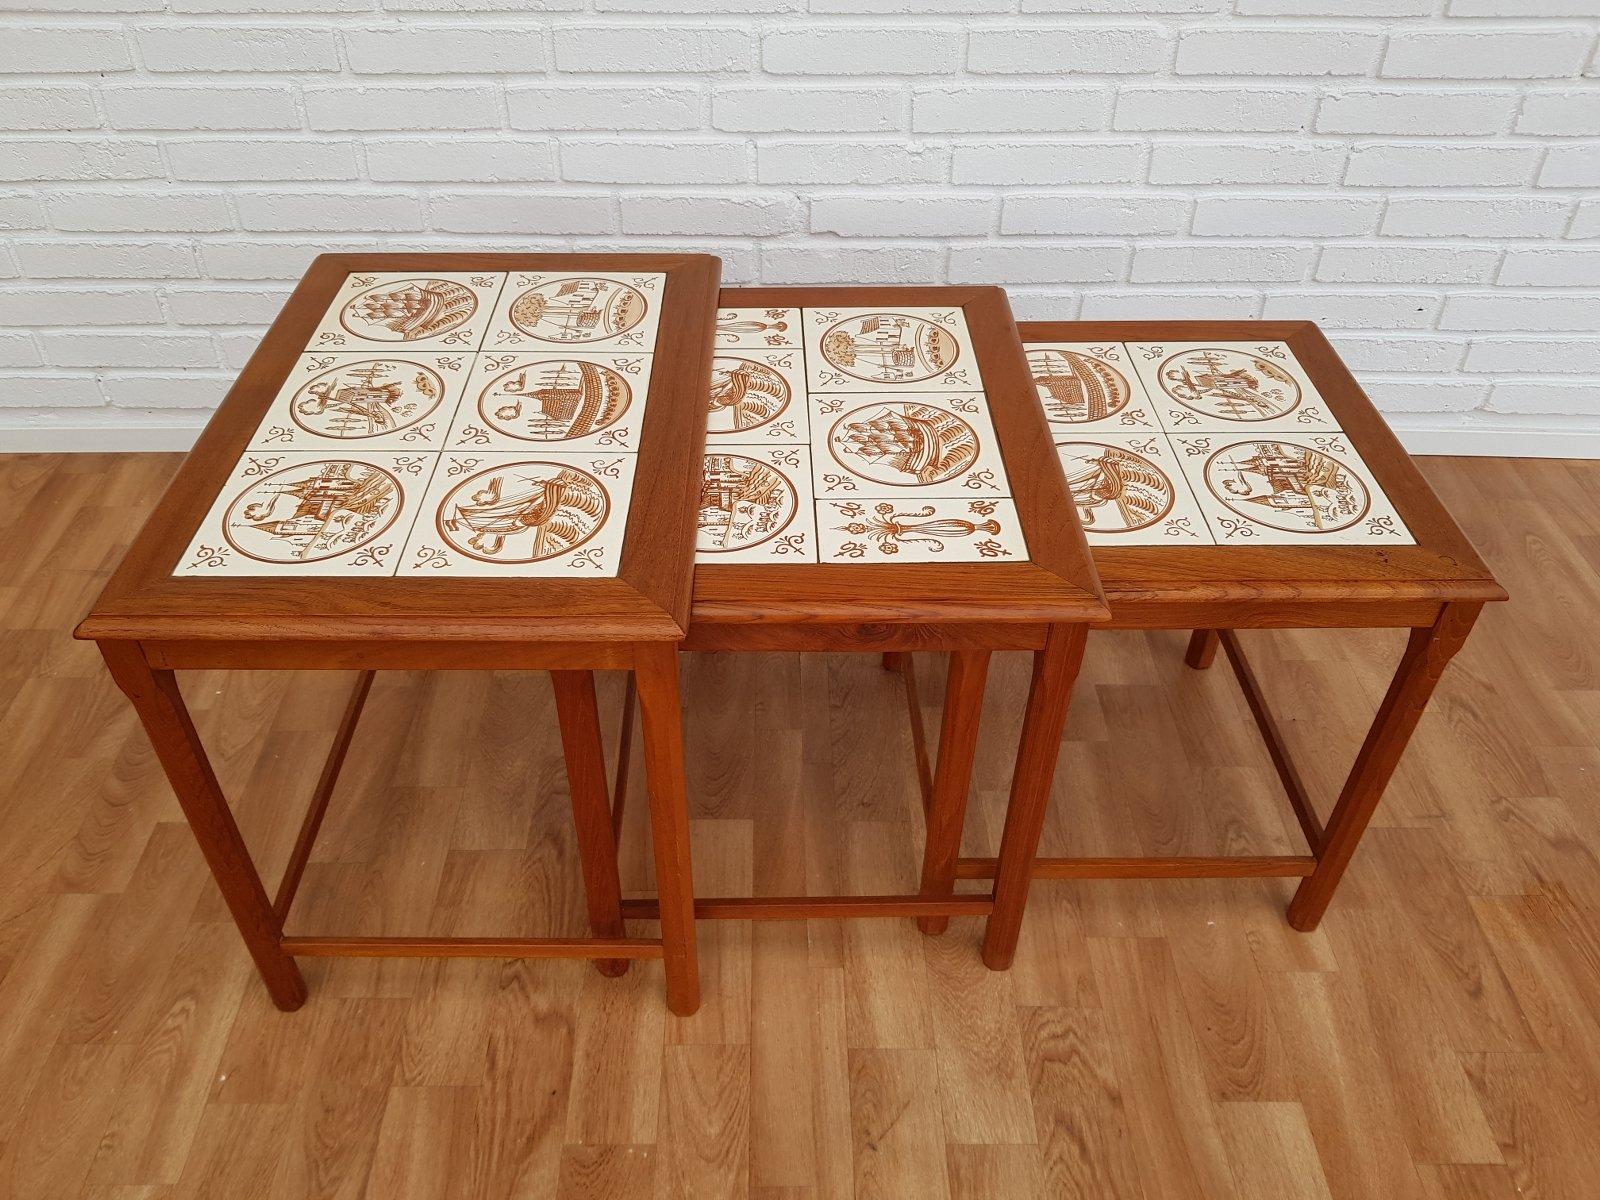 70s, Nesting Table, Danish Design, Hand-Painted Ceramic Tiles, Teak Wood For Sale 1